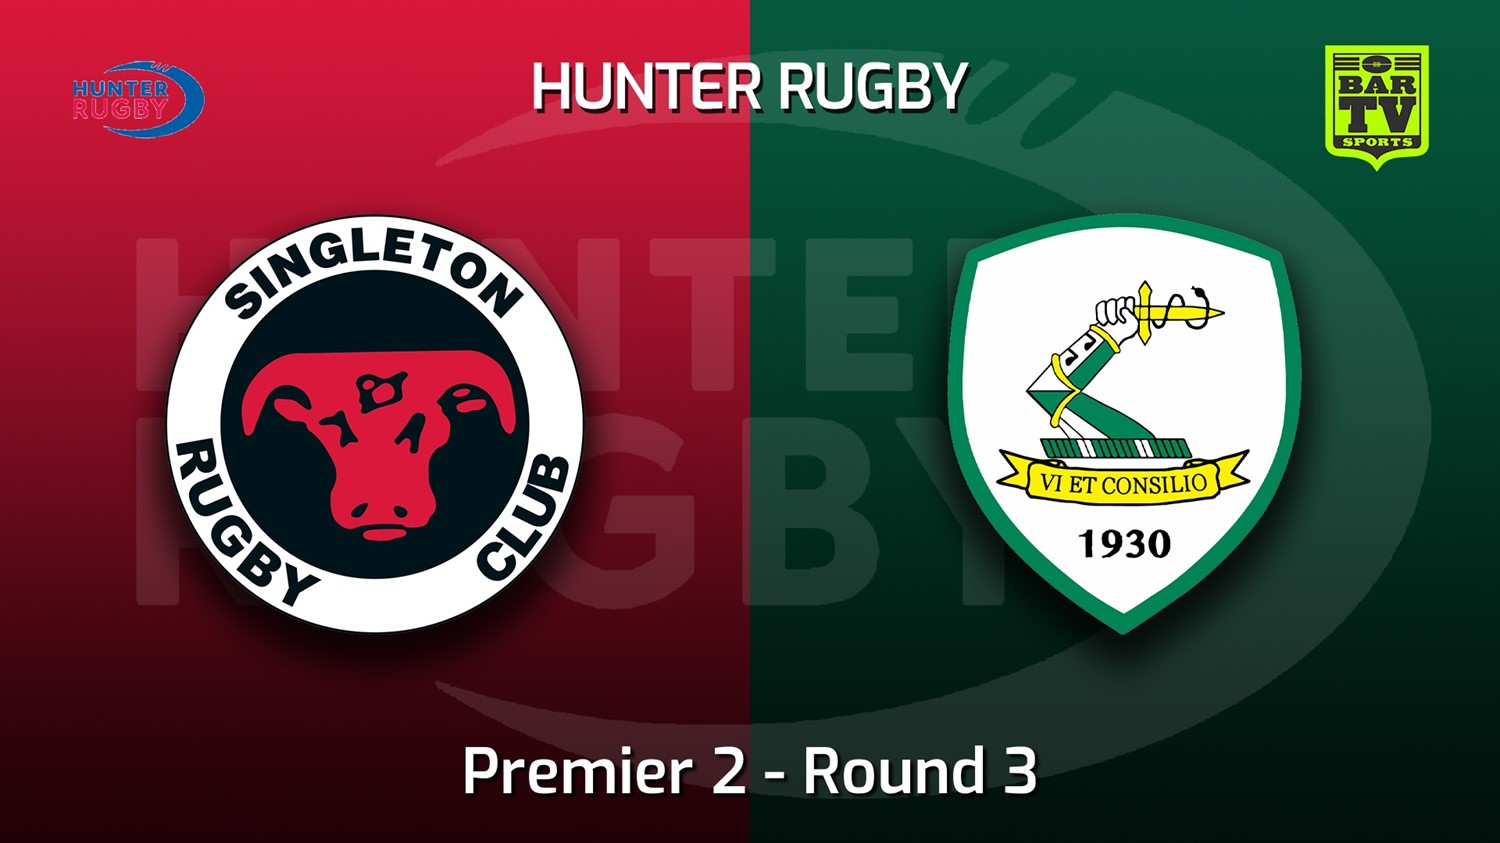 220507-Hunter Rugby Round 3 - Premier 2 - Singleton Bulls v Merewether Carlton Slate Image